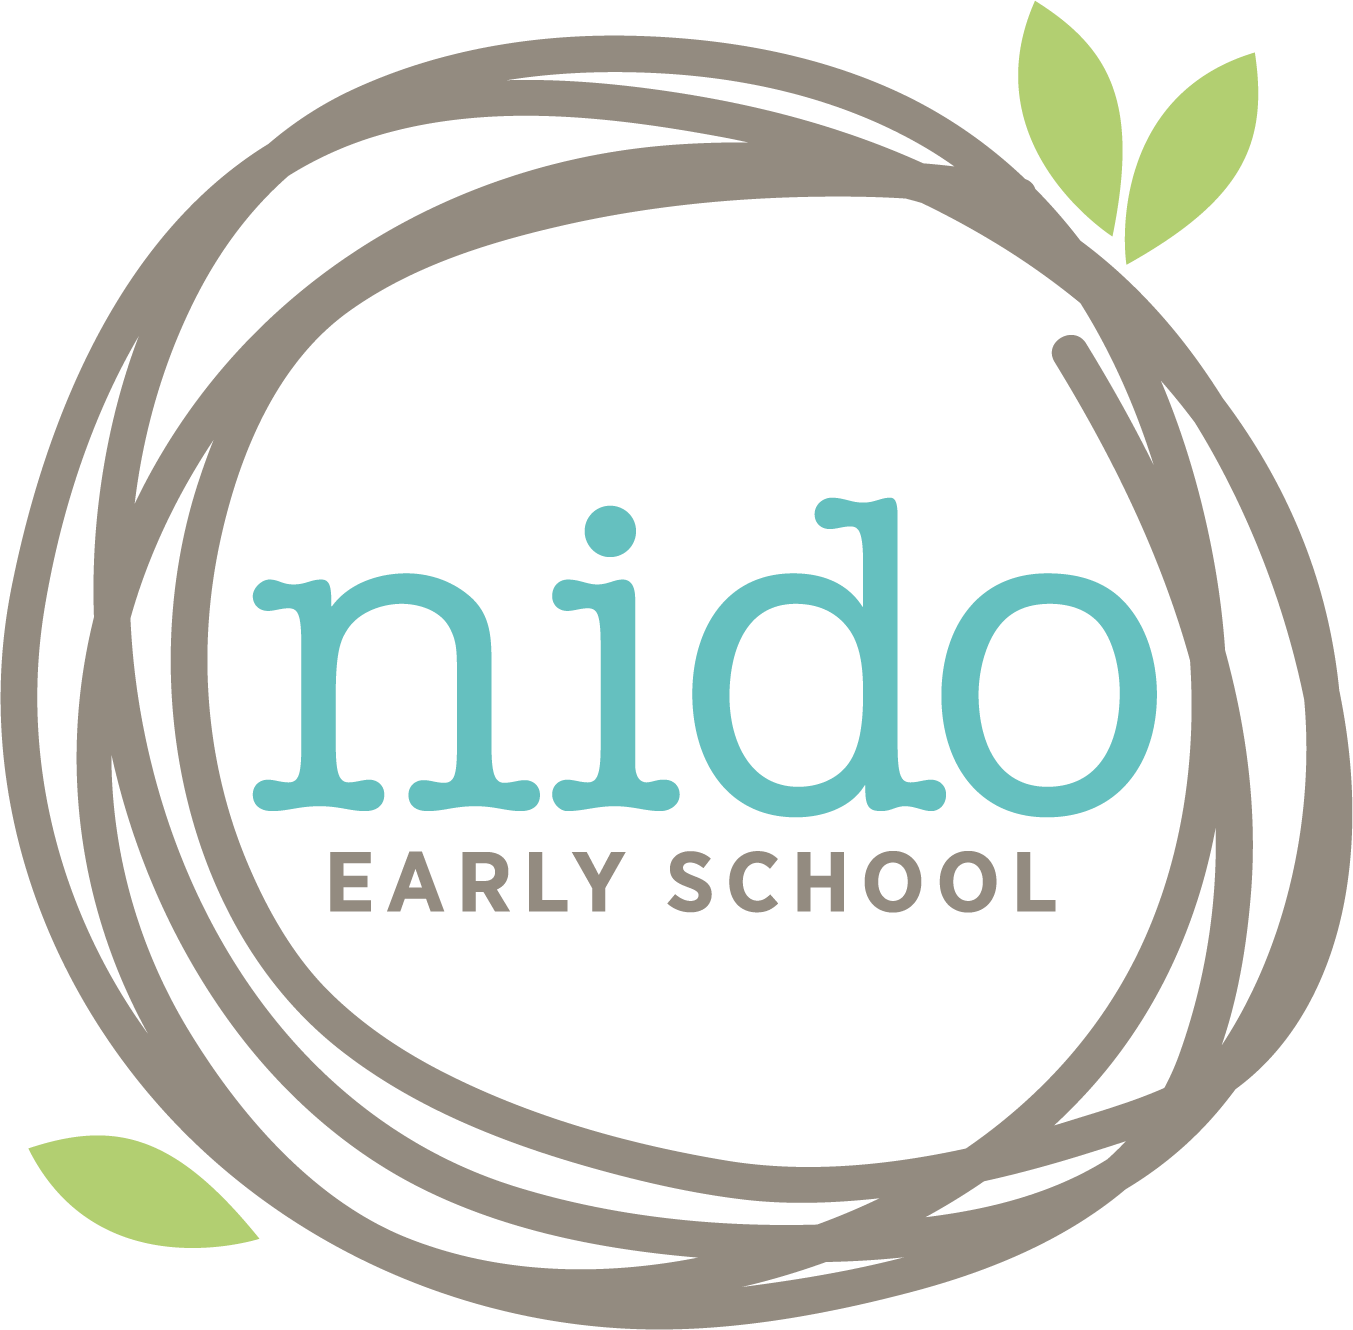 Nido early school logo